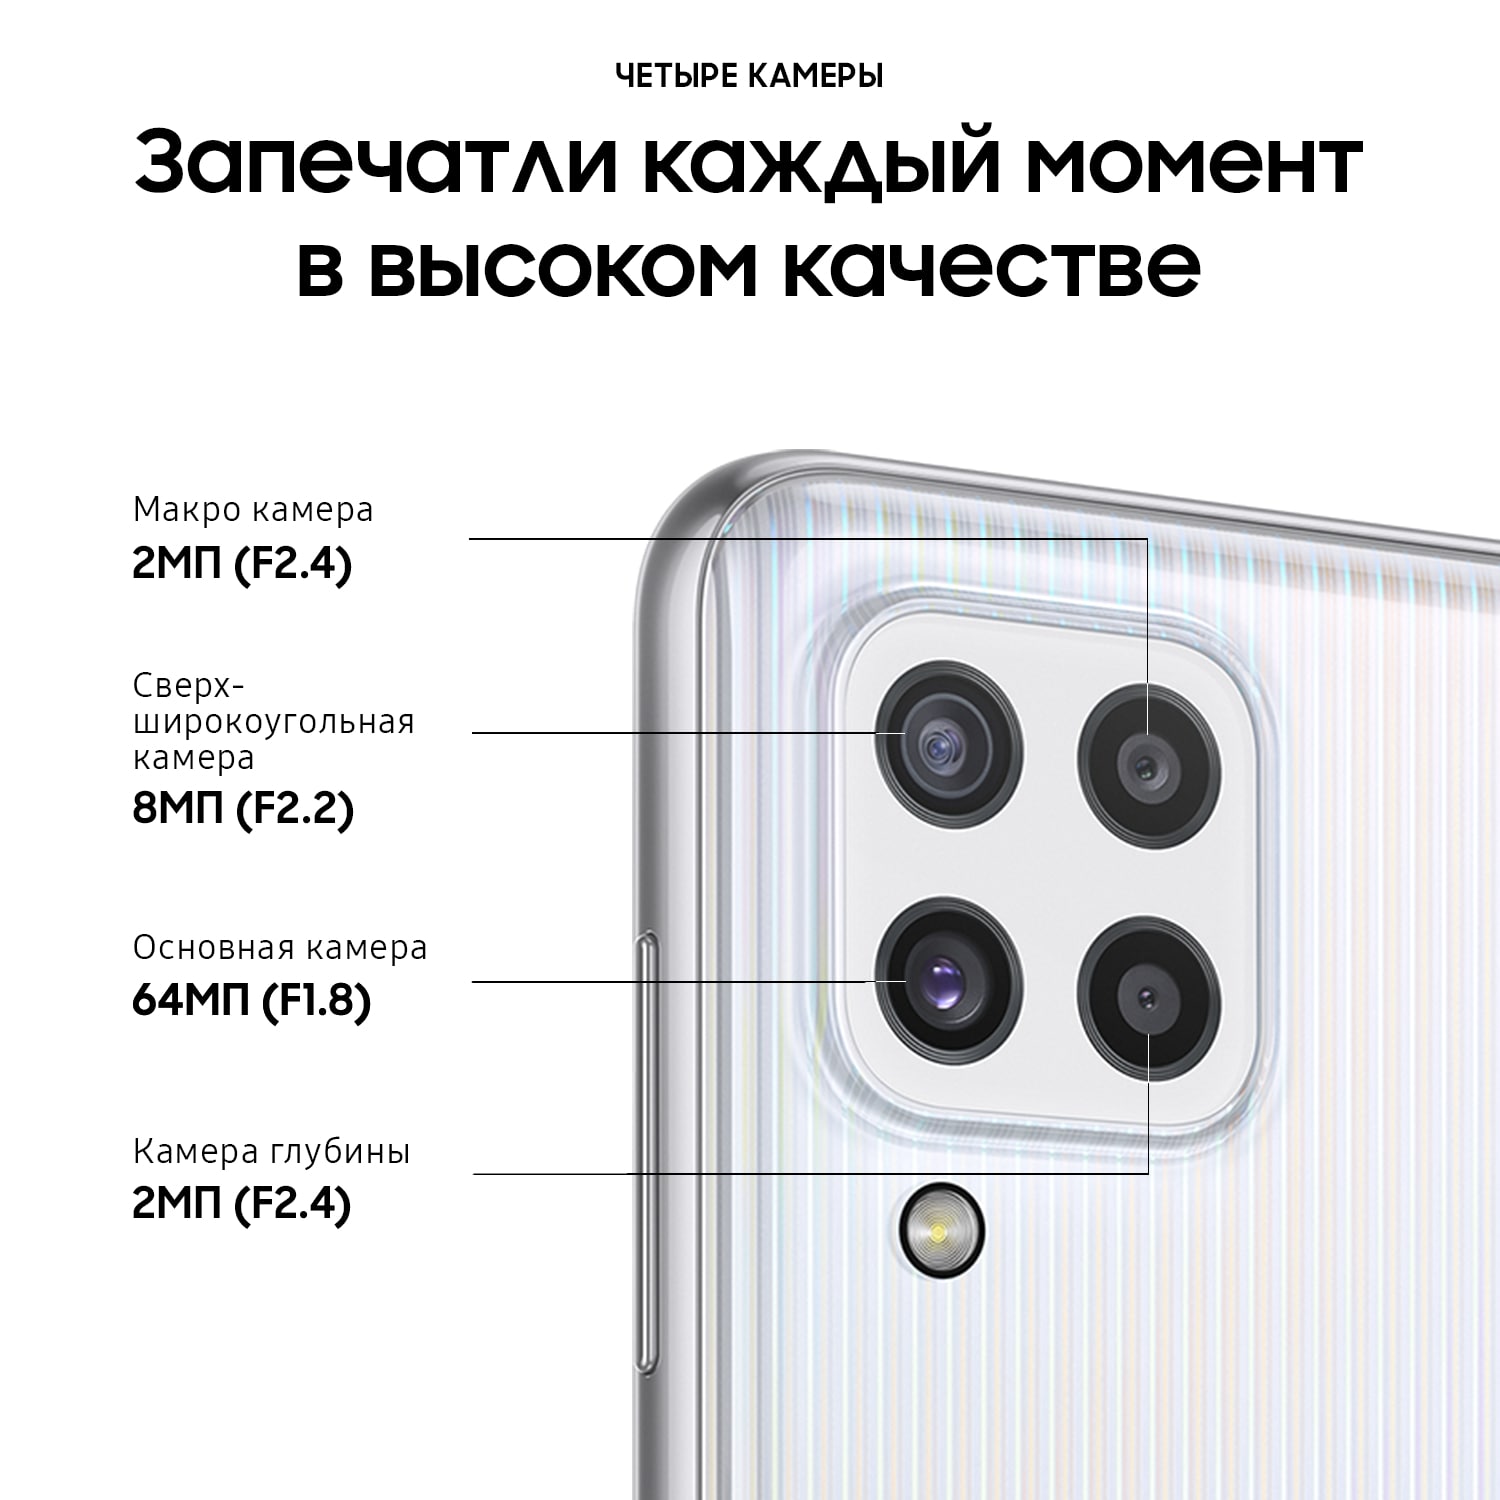 Samsung Galaxy M32 128GB White